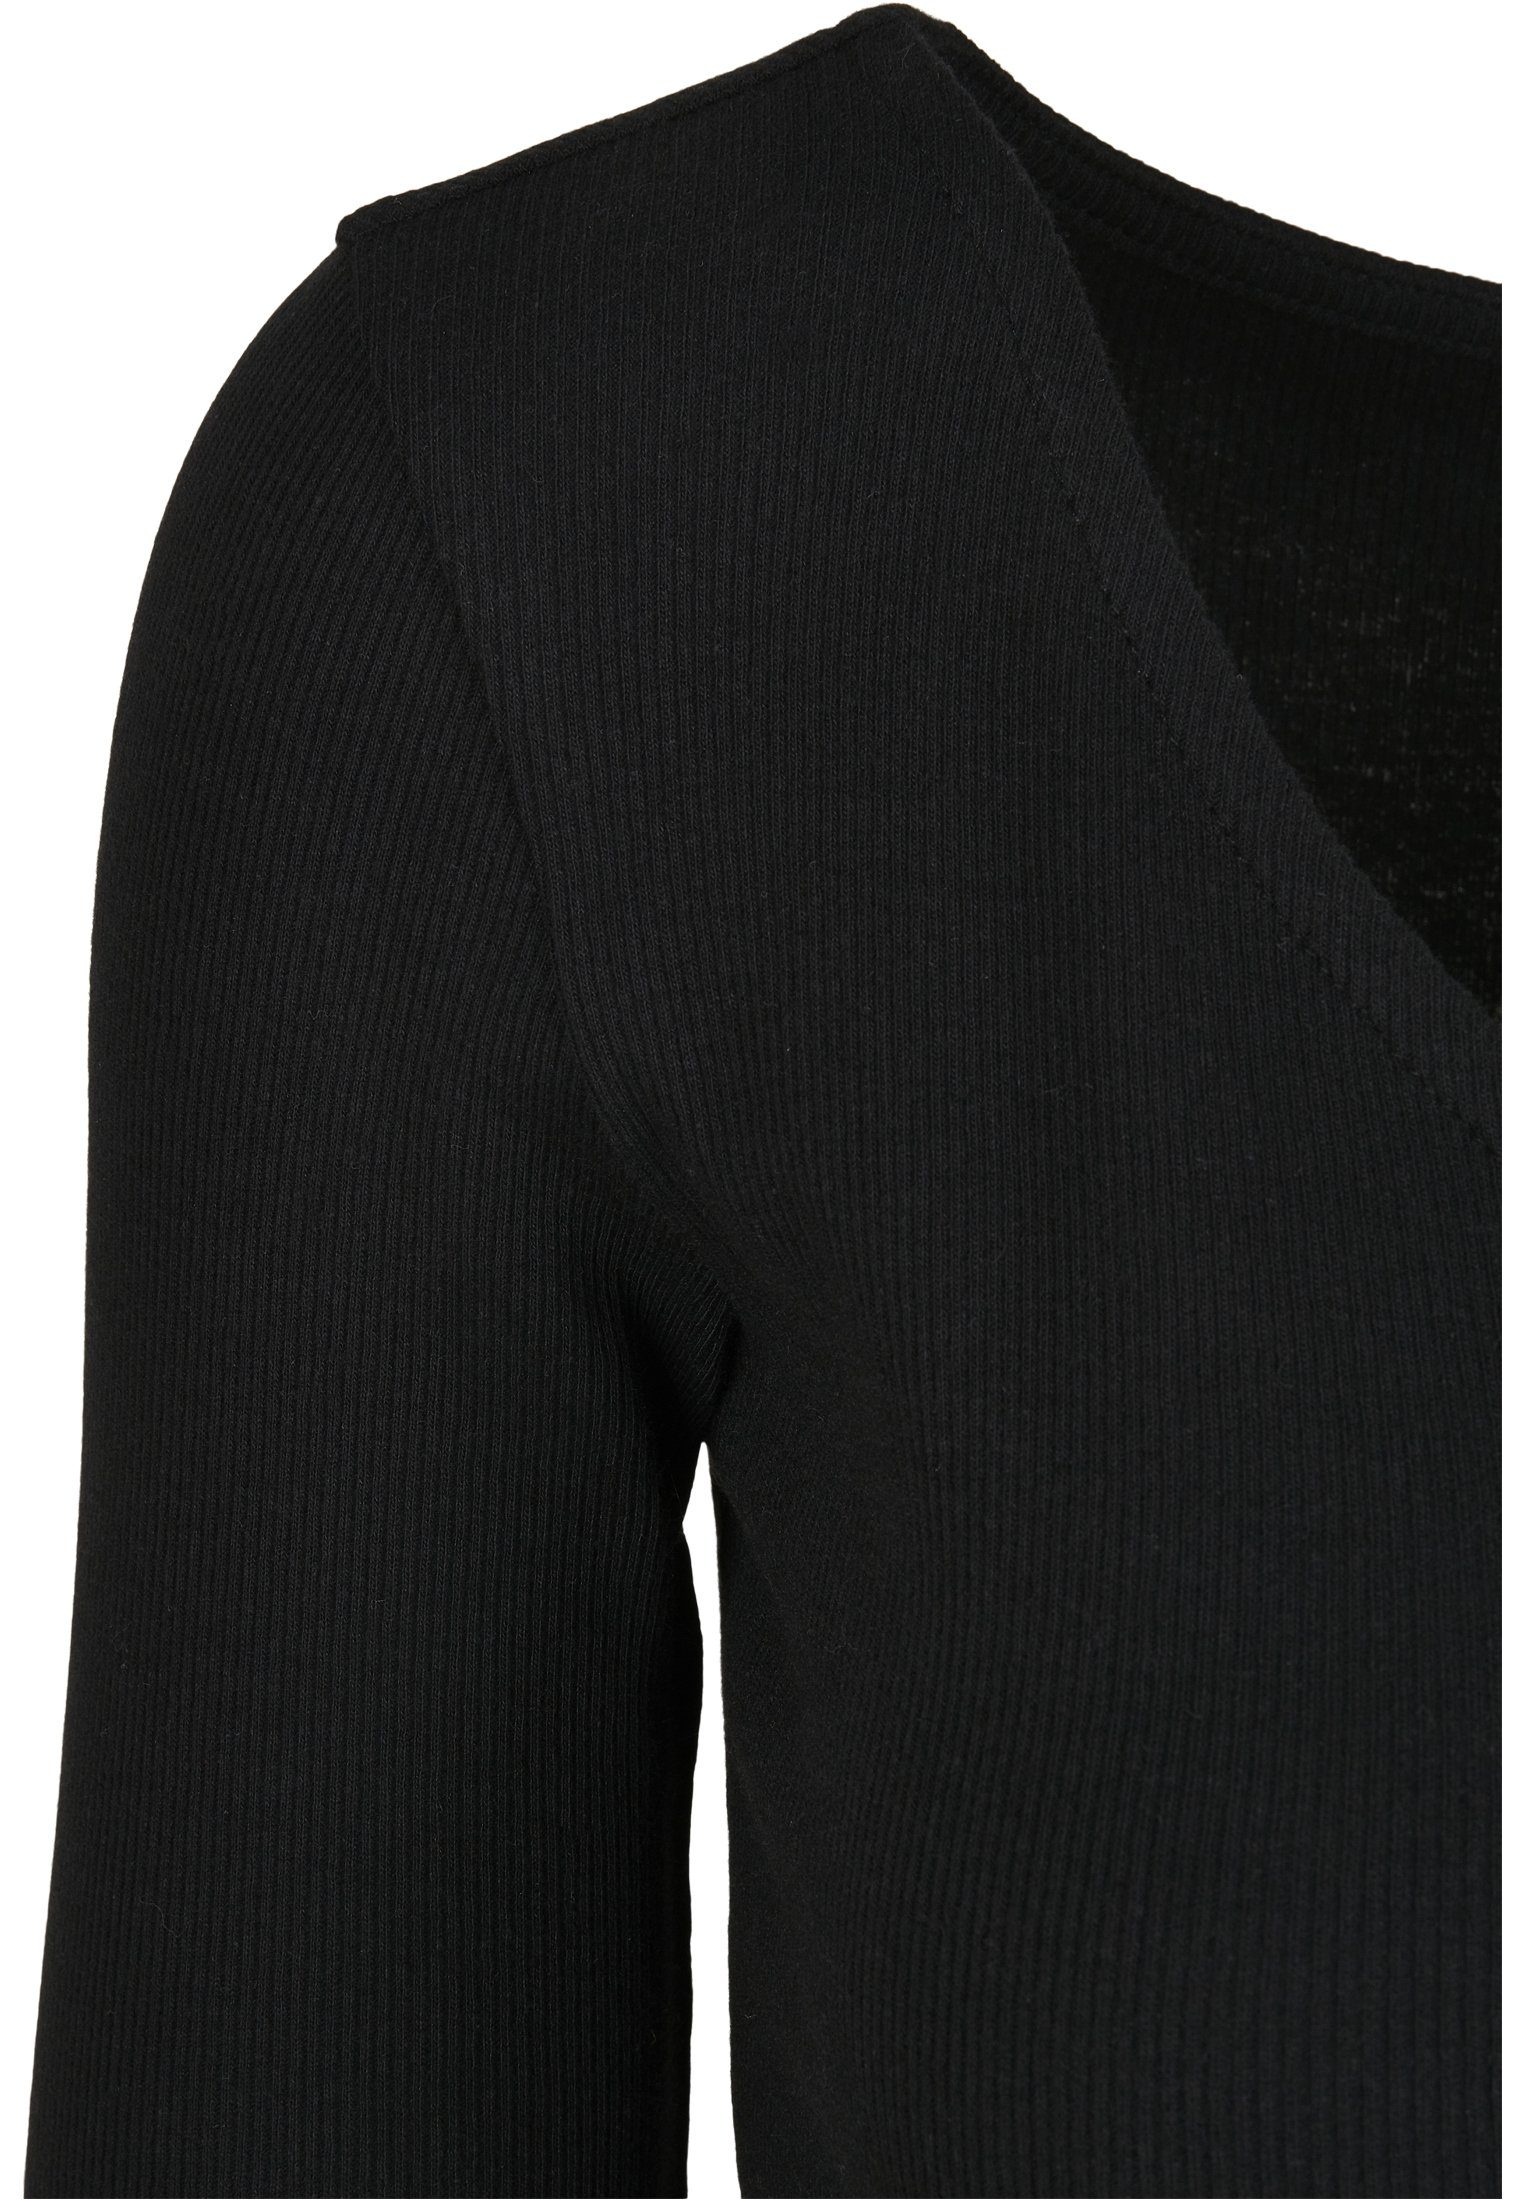 URBAN CLASSICS Langarmshirt black Cardigan Rib Ladies (1-tlg) Damen Cropped